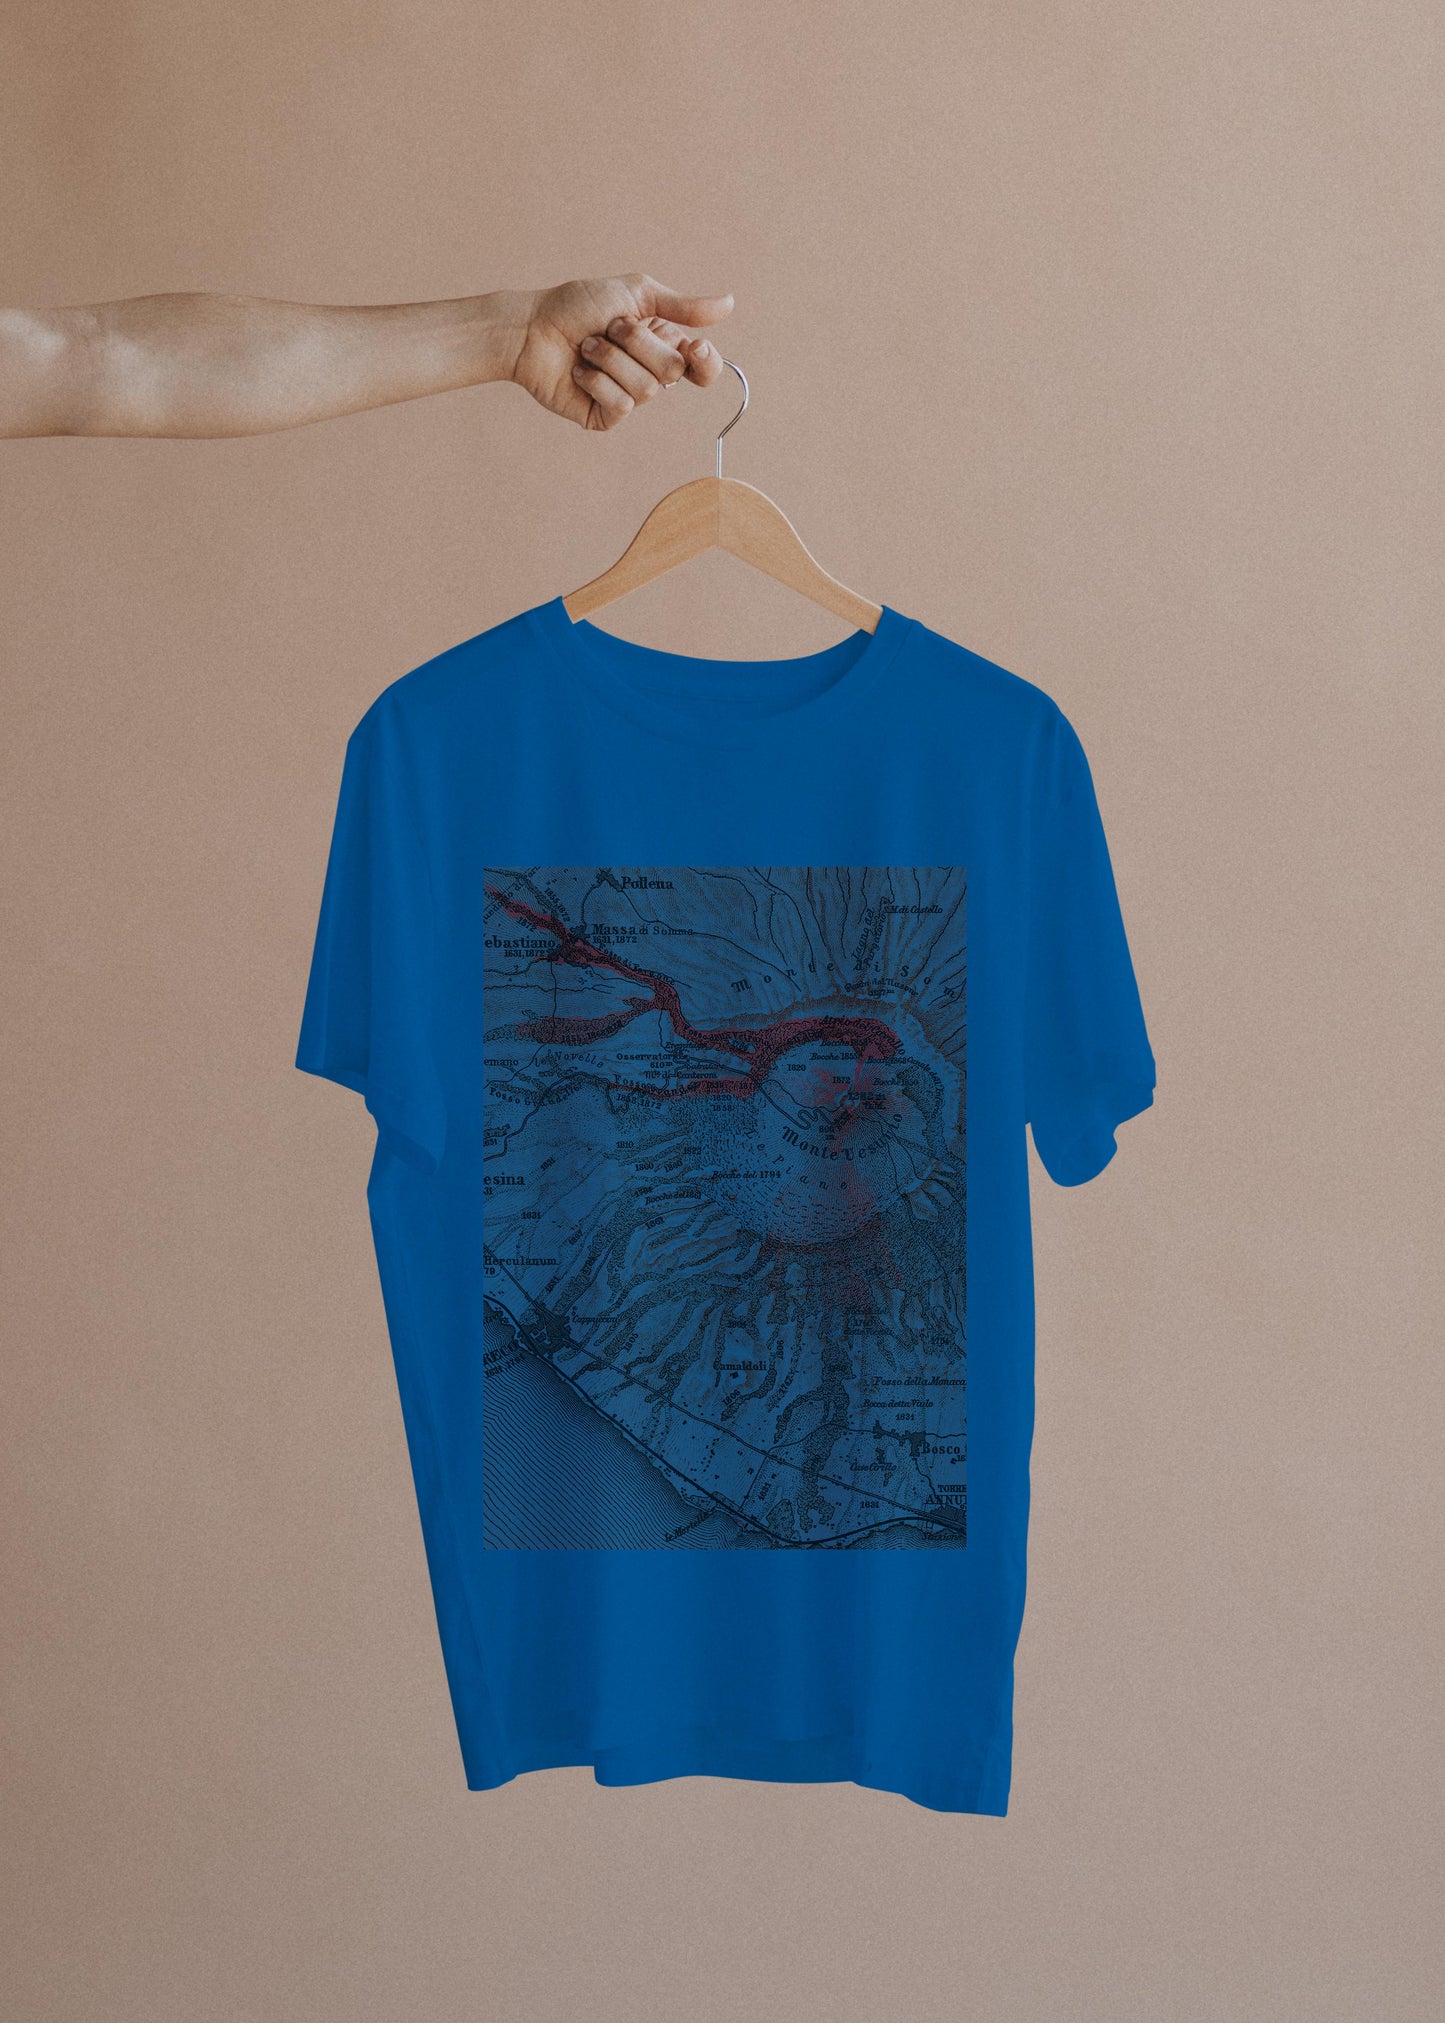 Camiseta Mapa do Vesúvio - Masculina -camiseta- Editora Datum